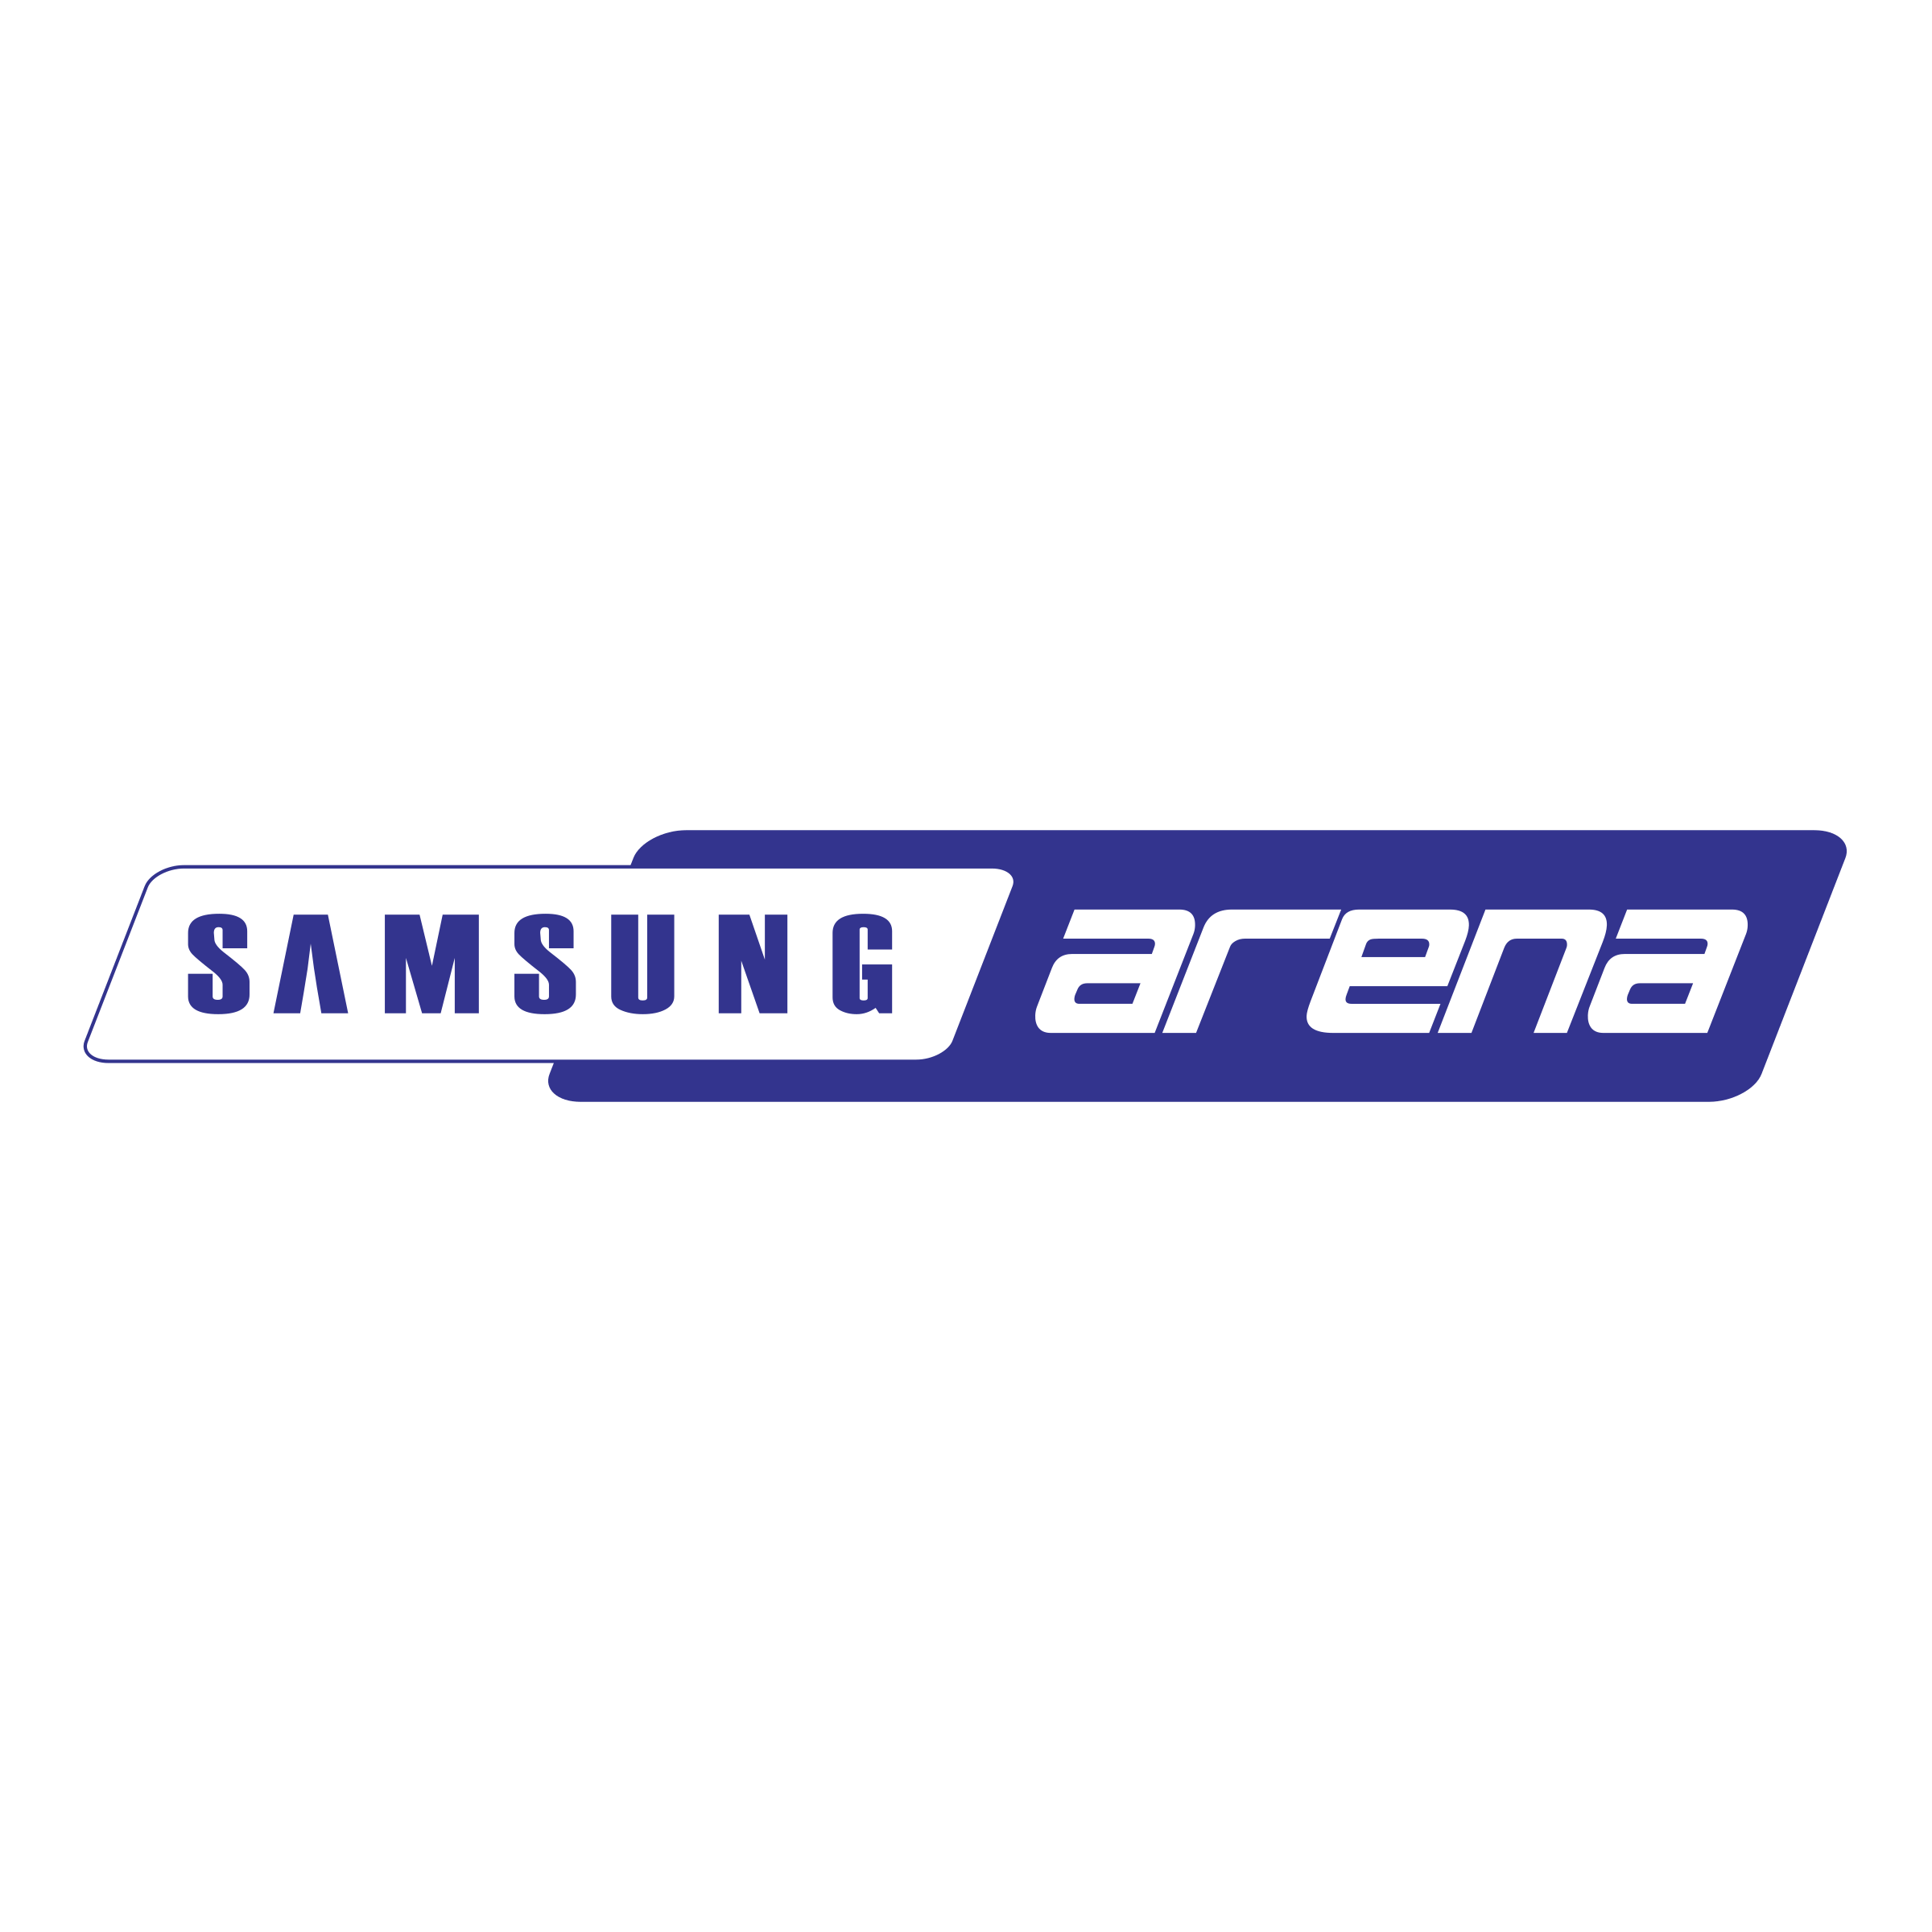 Arena Logo - Samsung ARENA Logo PNG Transparent & SVG Vector - Freebie Supply